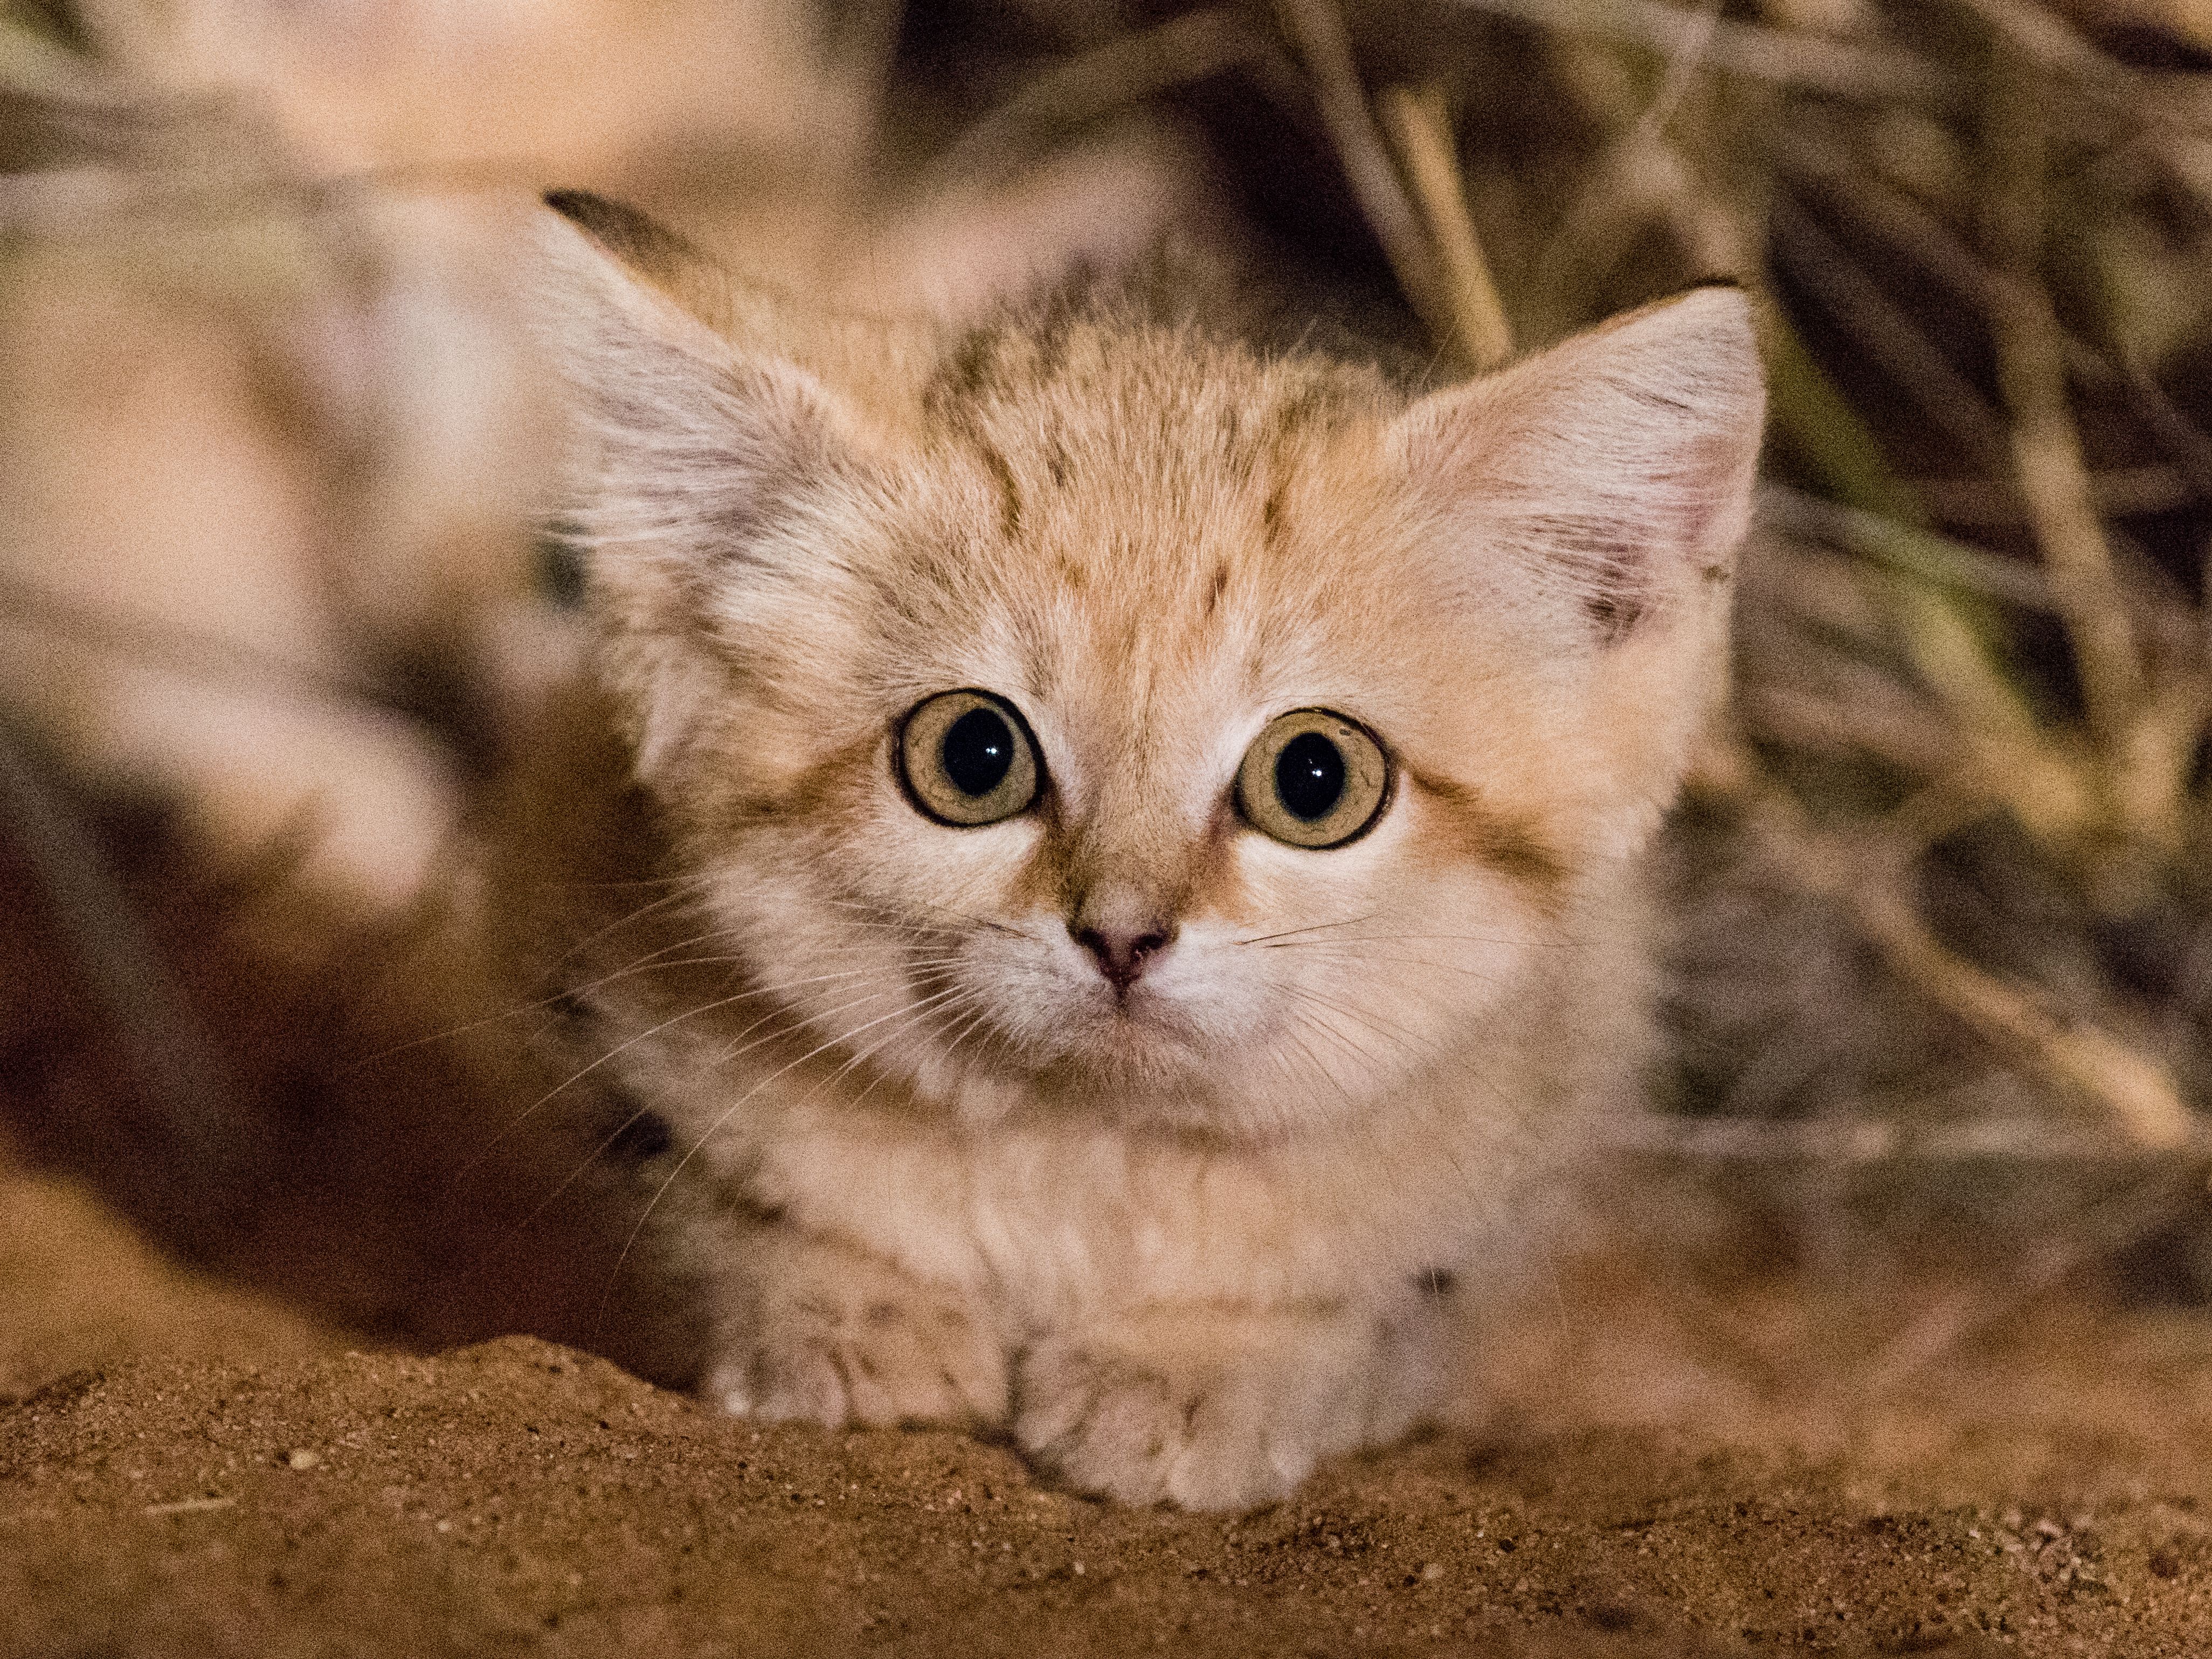 Ten Amazing Small Wild Cats, Science